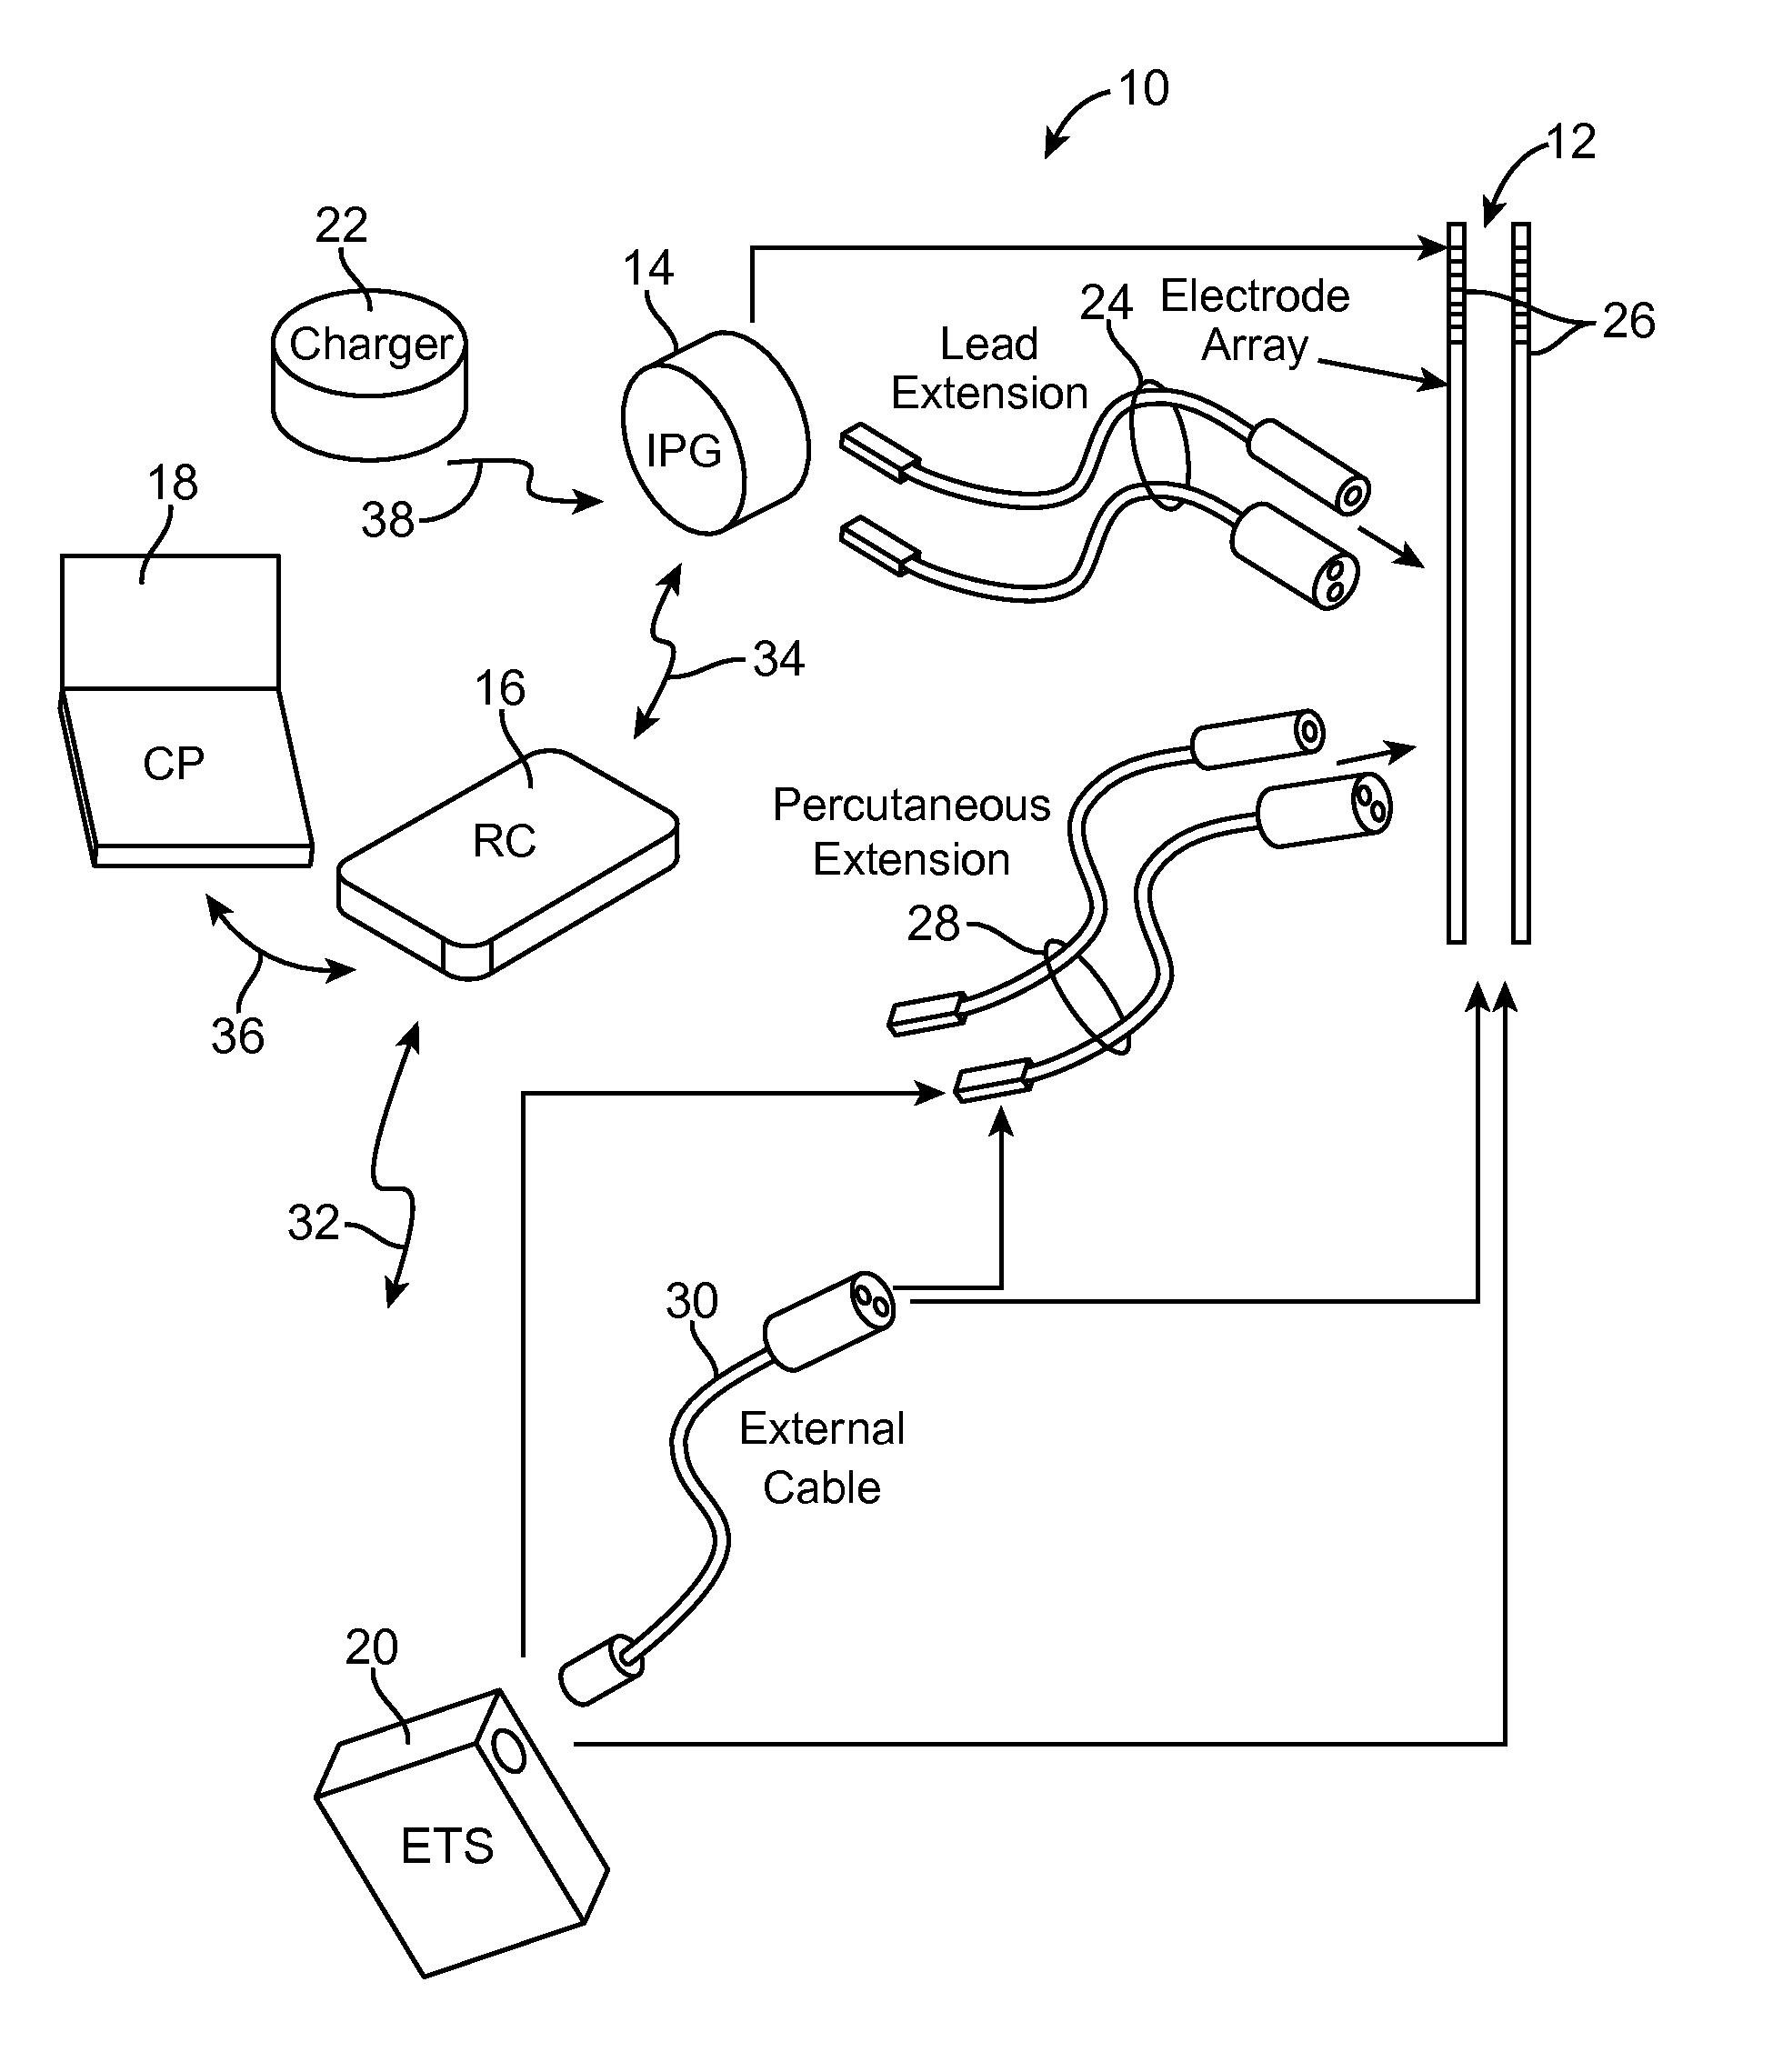 Technique for linking electrodes together during programming of neurostimulation system